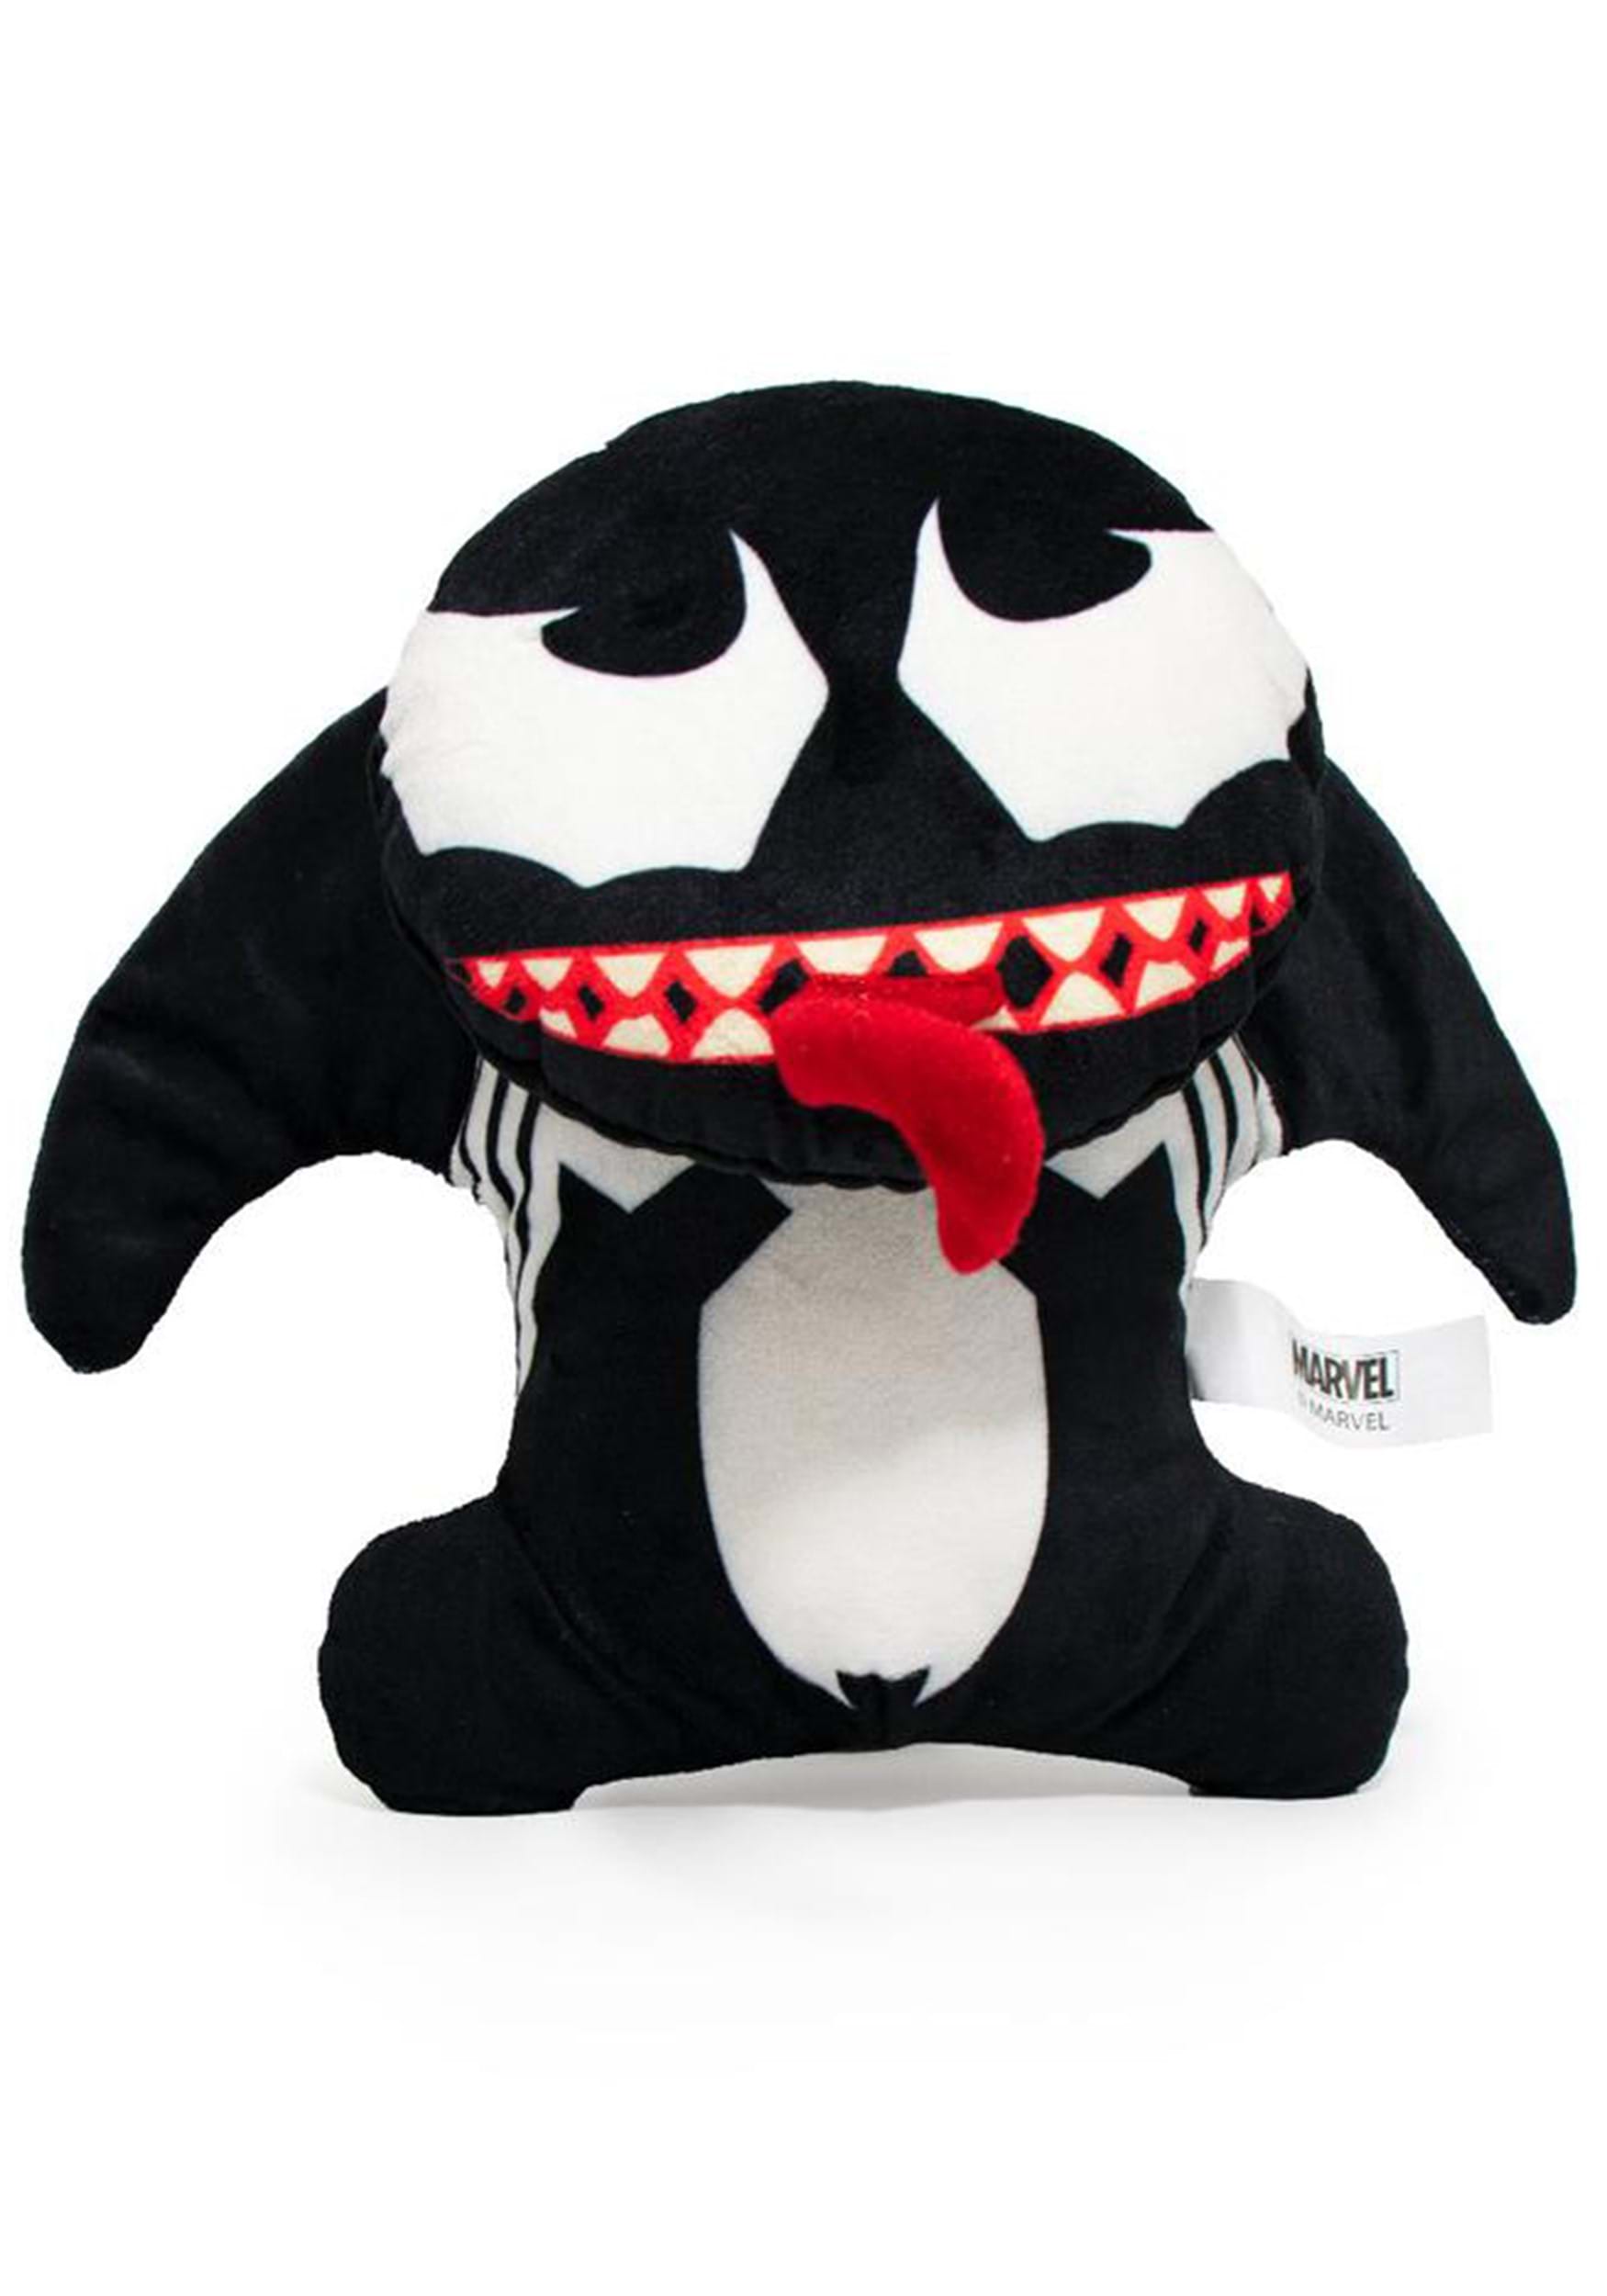 Squeaker Dog Toy of Venom